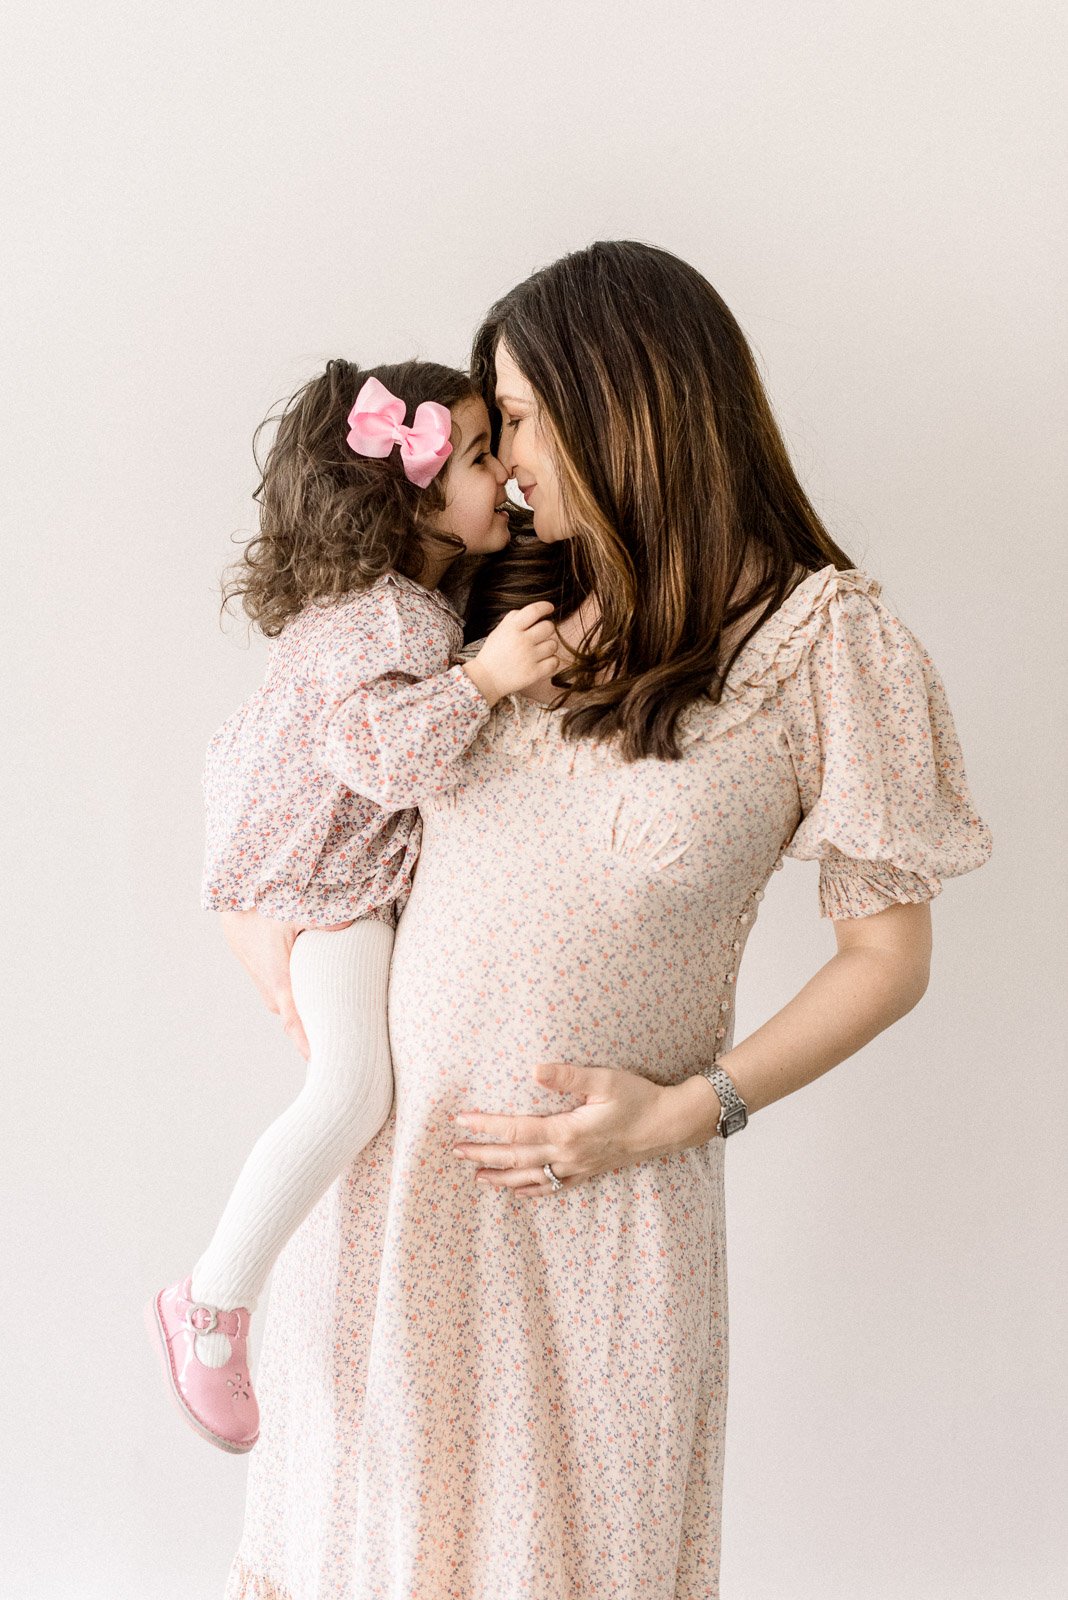 Nirmel Maternity by Michelle Lange Photography-5.jpg